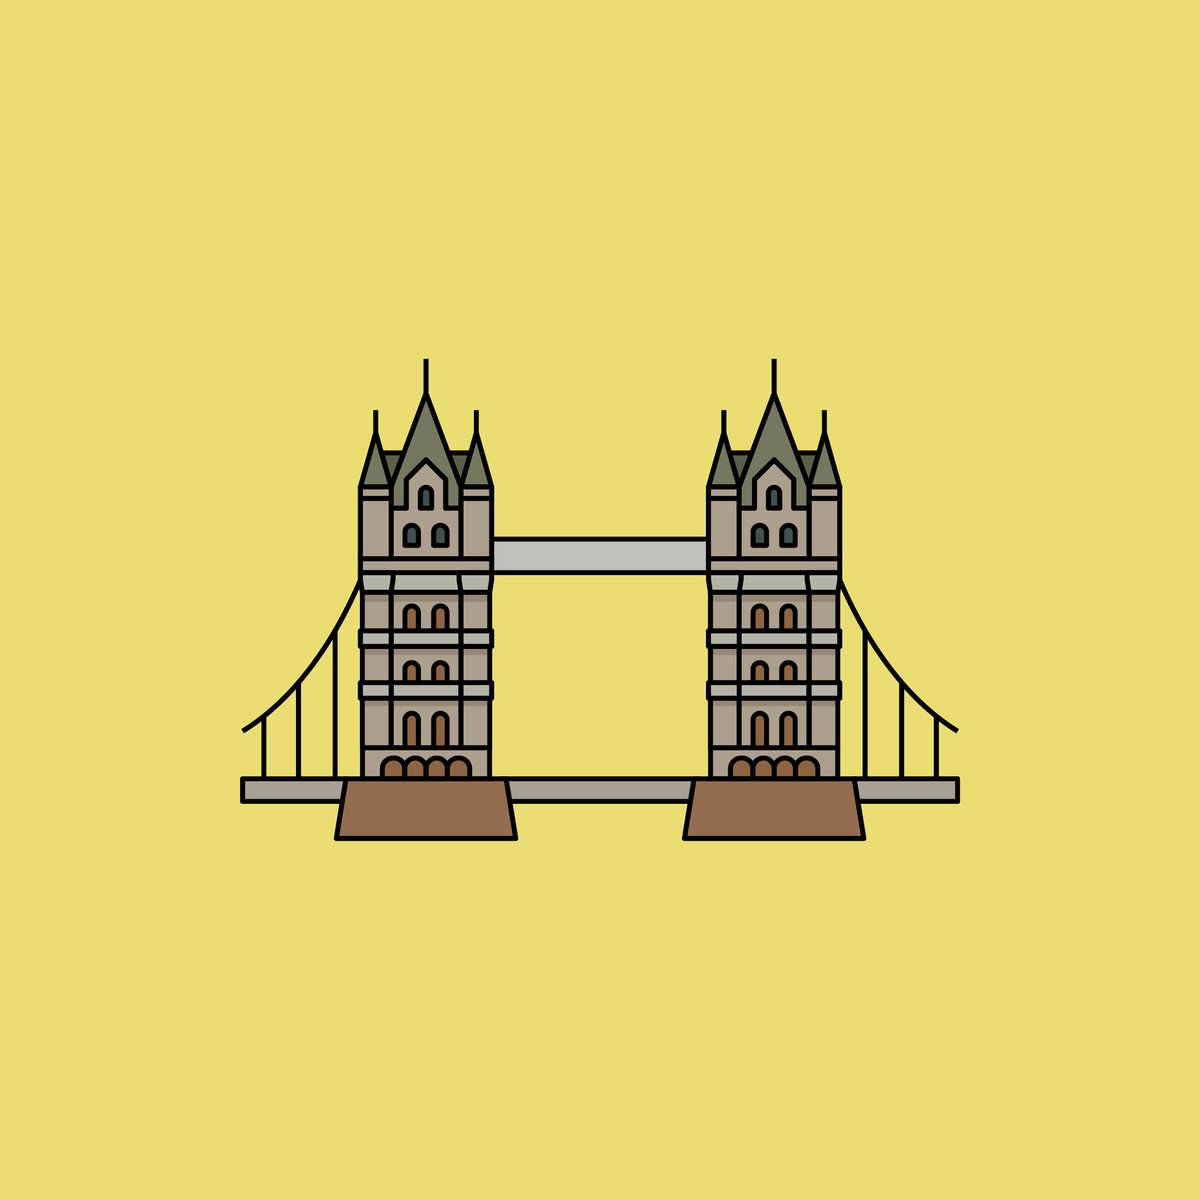 London Bridge Tower

#Twitter #TwitterX #follow #like #icon #viral #graphics #design #colors #illustration #vector #art #vectoricon #icondesign #building #famous #world #landmark #london #bridge #tower 

stock.adobe.com/contributor/21…